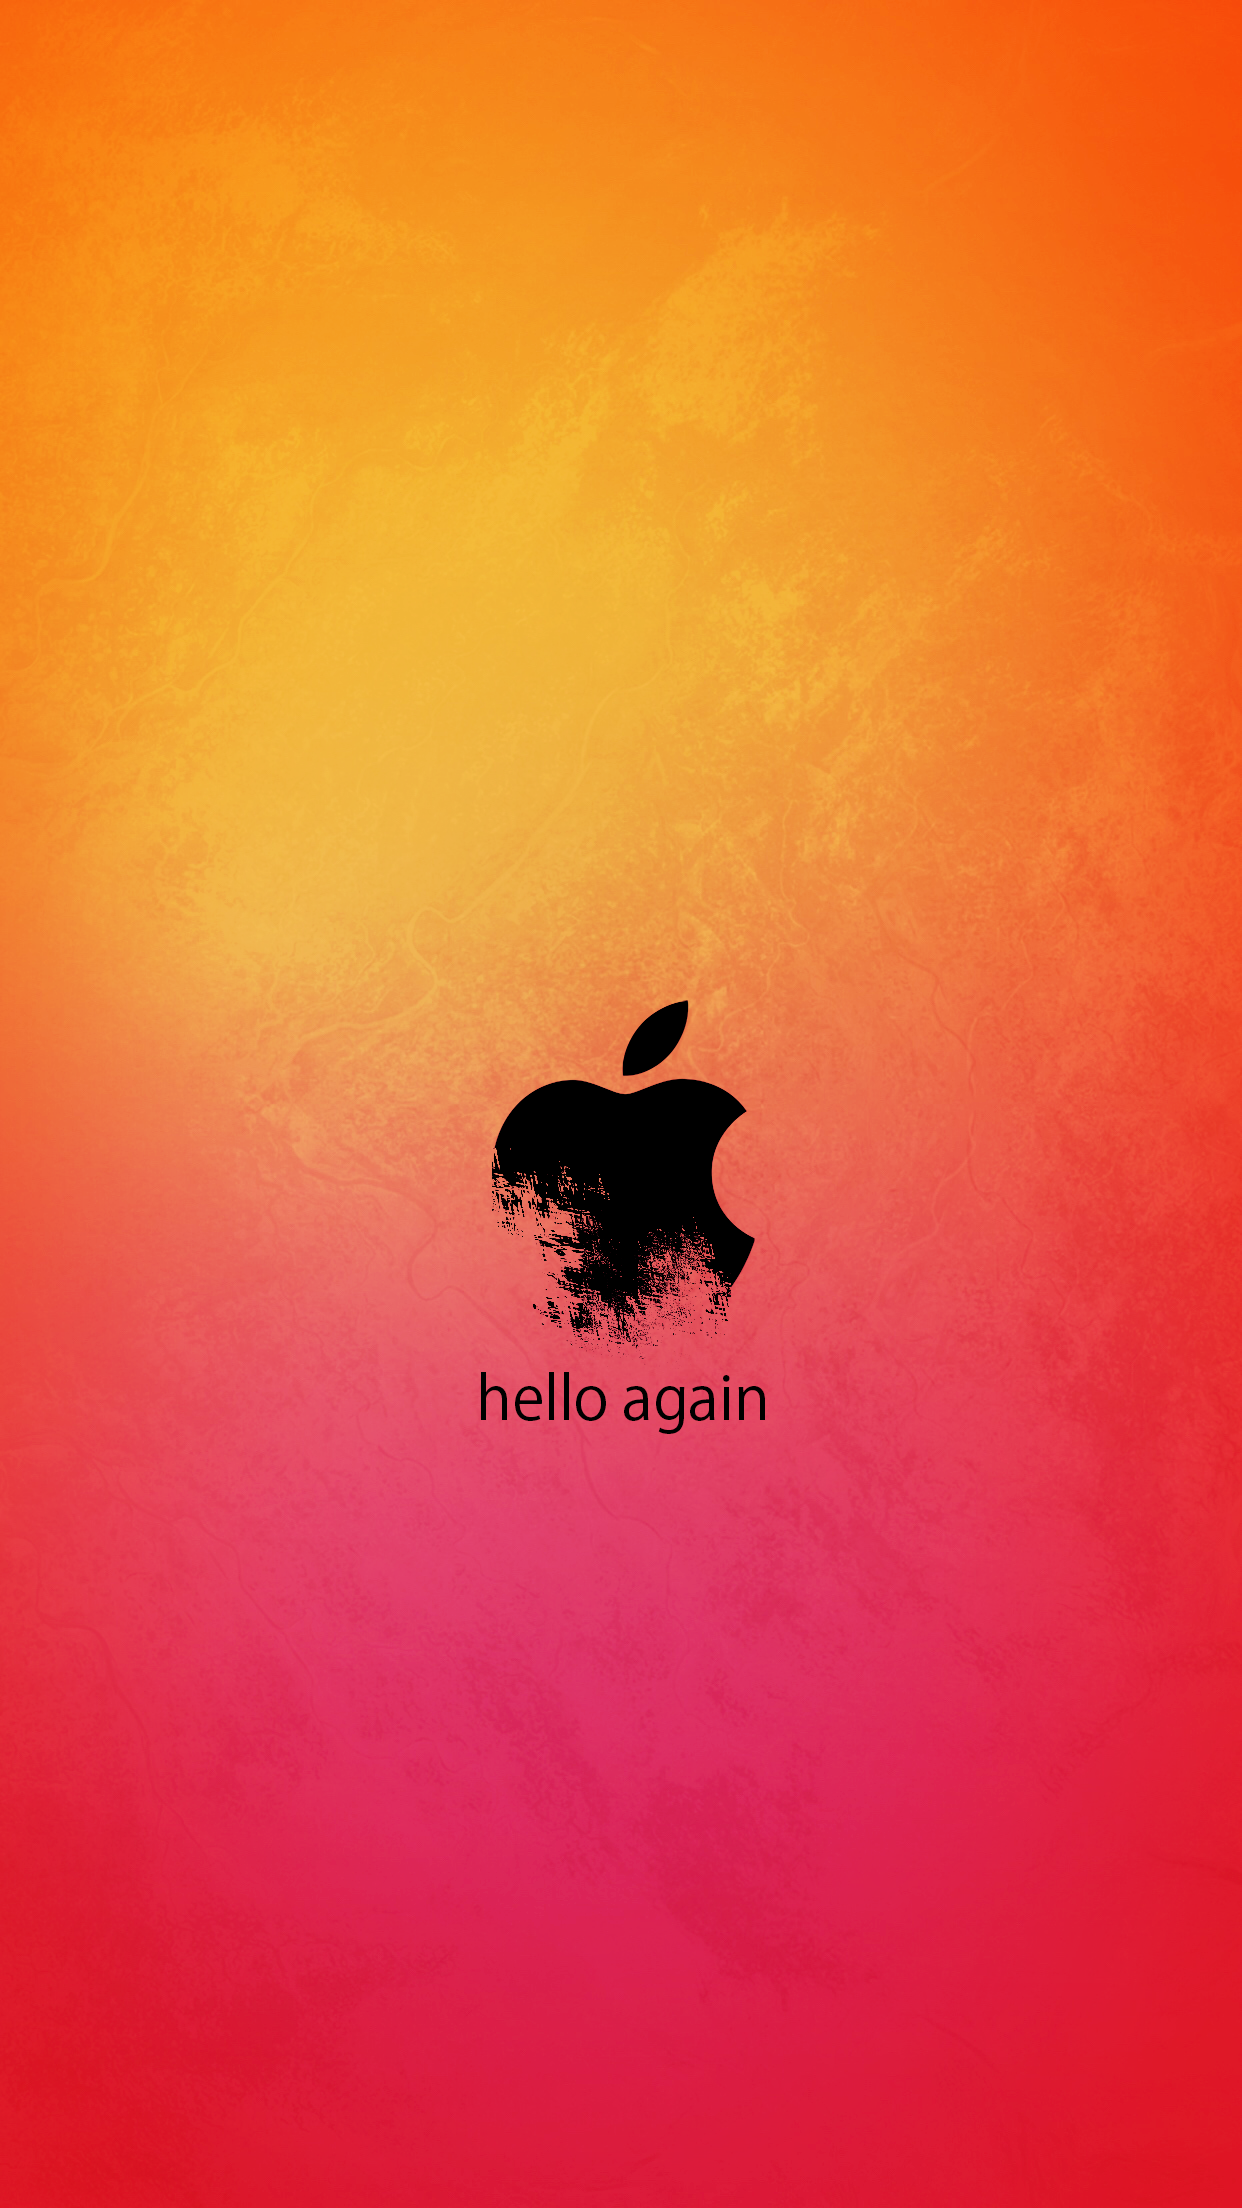 Apple October 27 event wallpaper: hello again